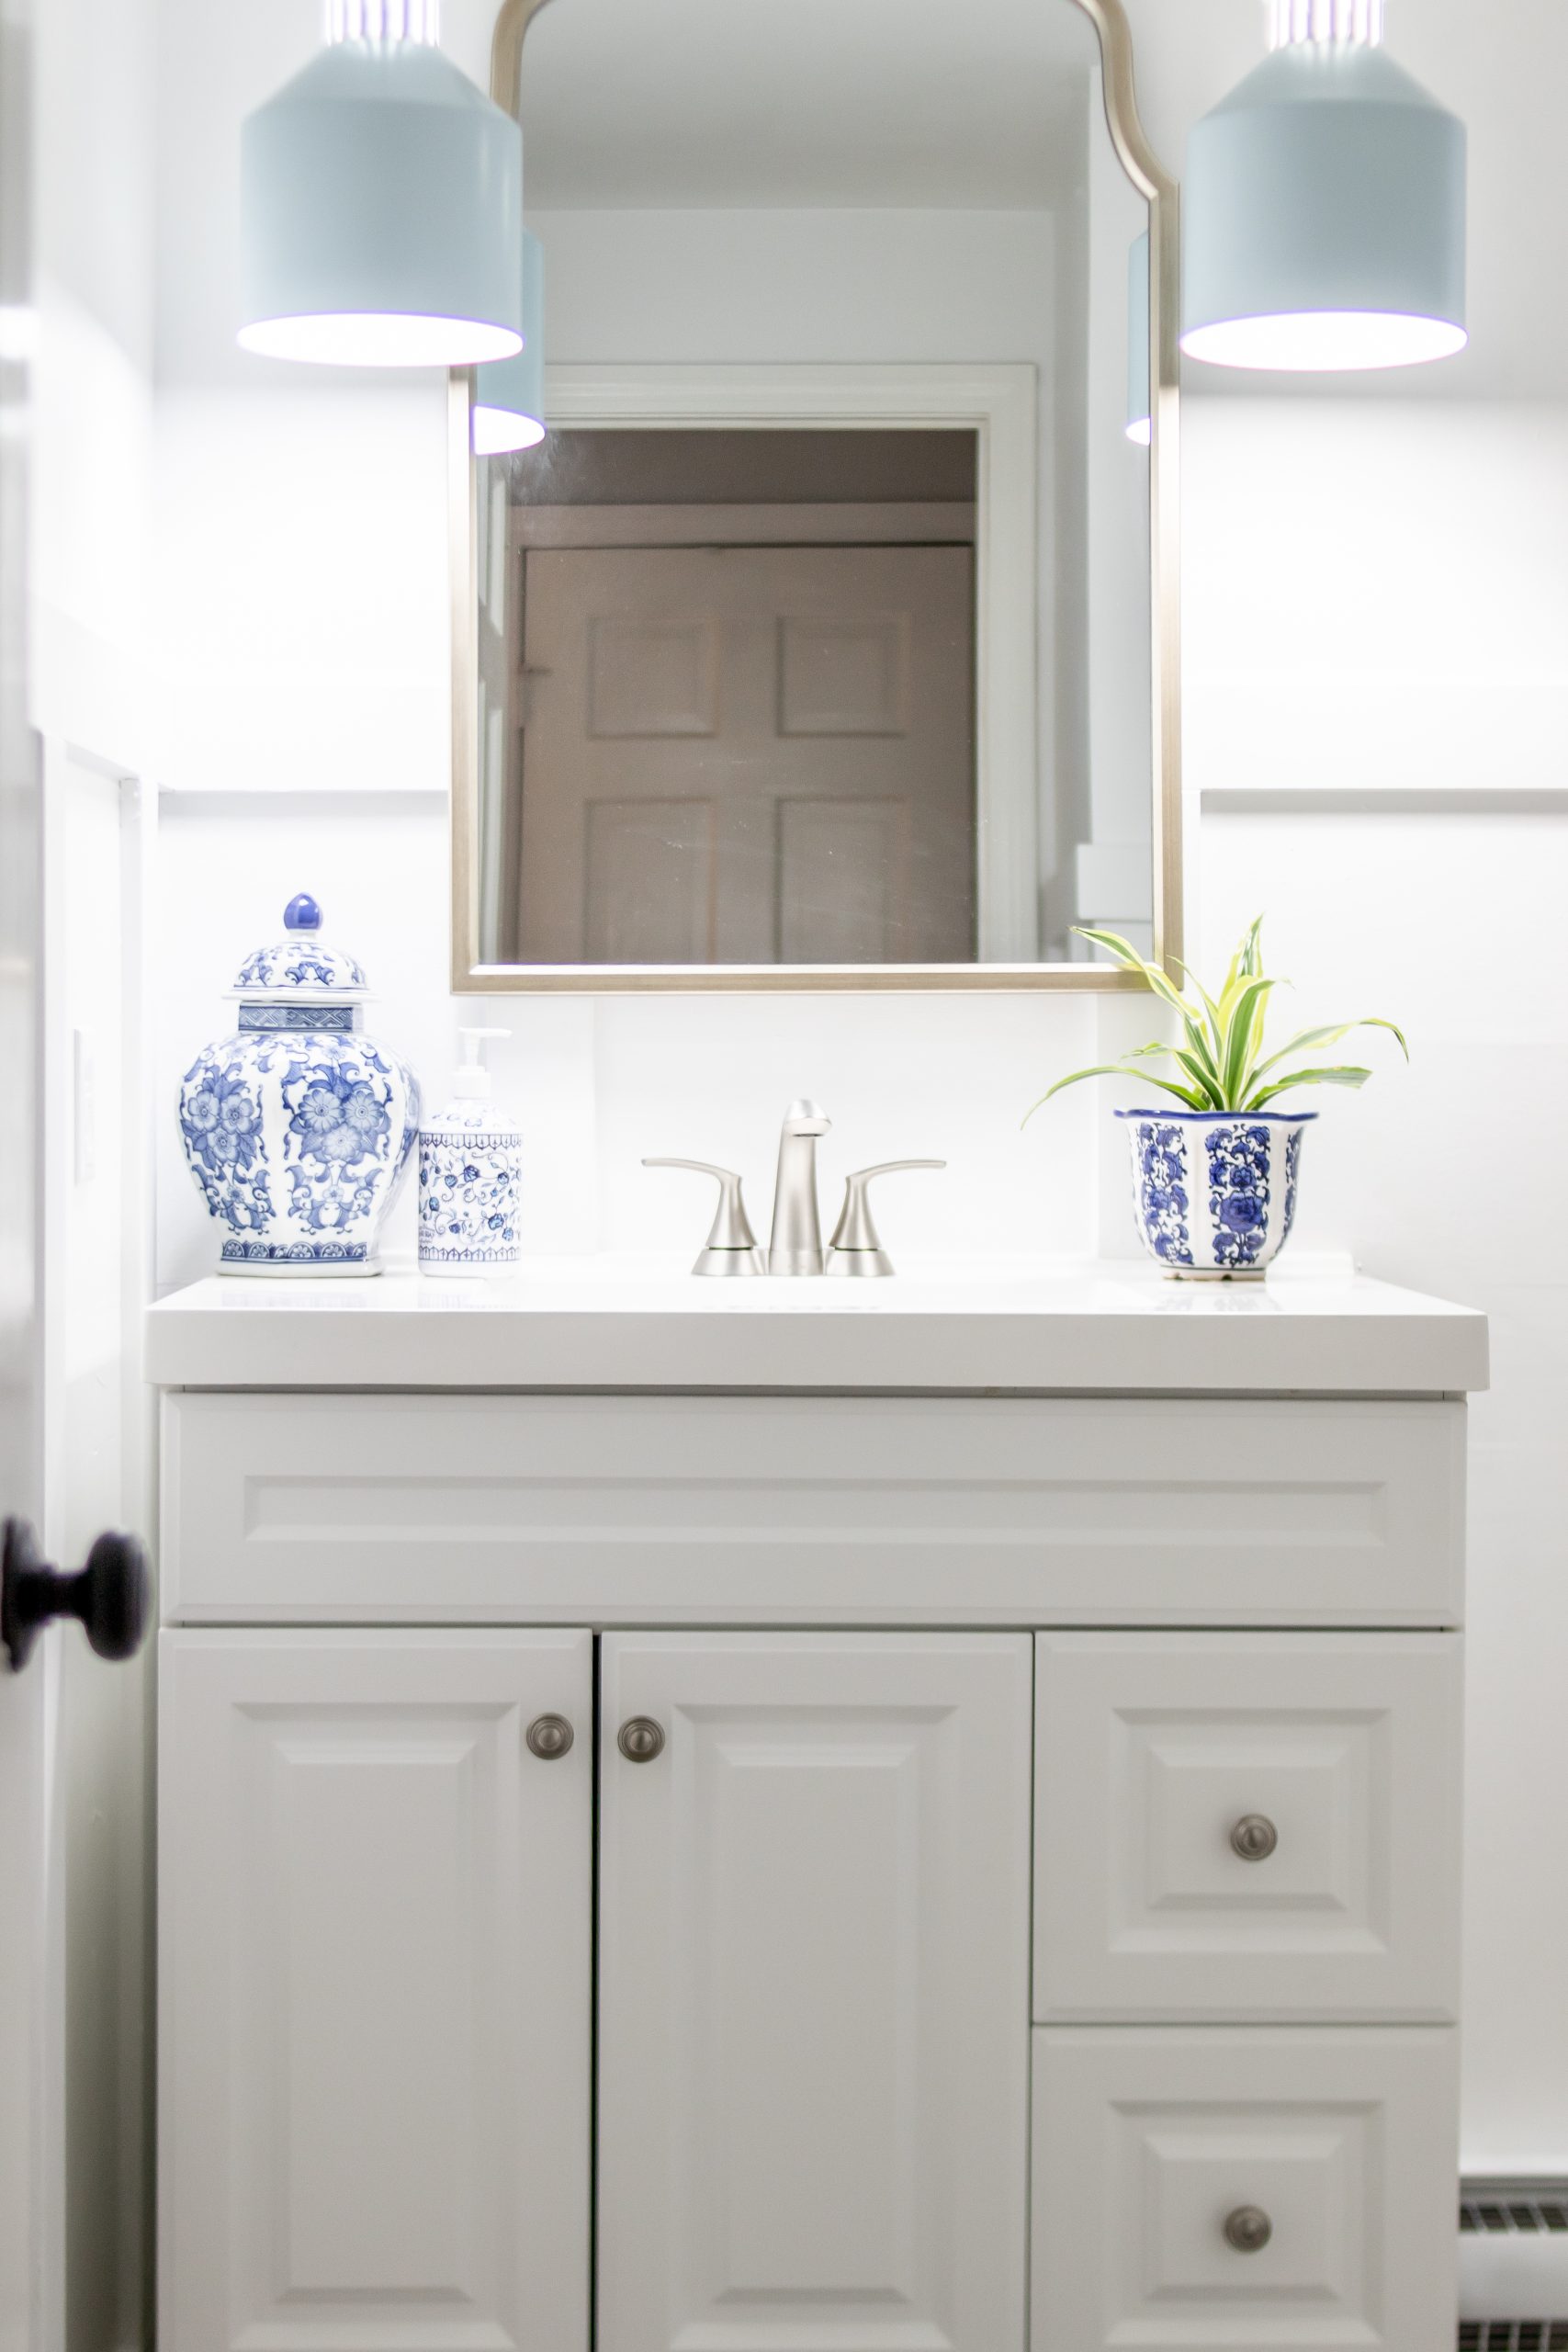 Cape Cod inspired bathroom light blue pendant lights arch mirror white vanity blue ginger jar decor